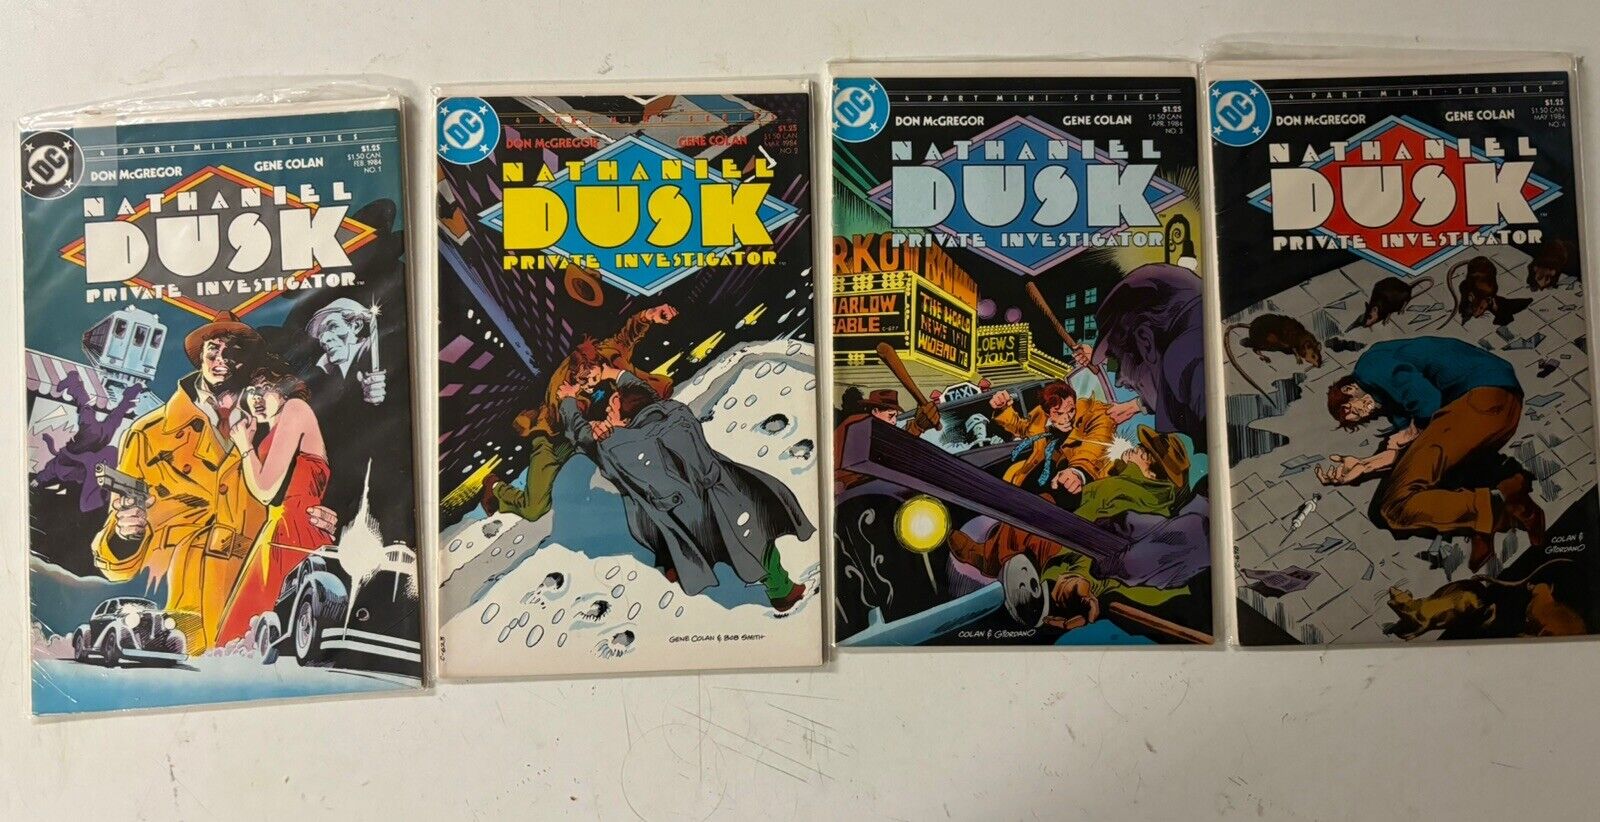 Nathaniel Dusk Private Investigator 1 2 3 4 DC Comics Complete Set 1984